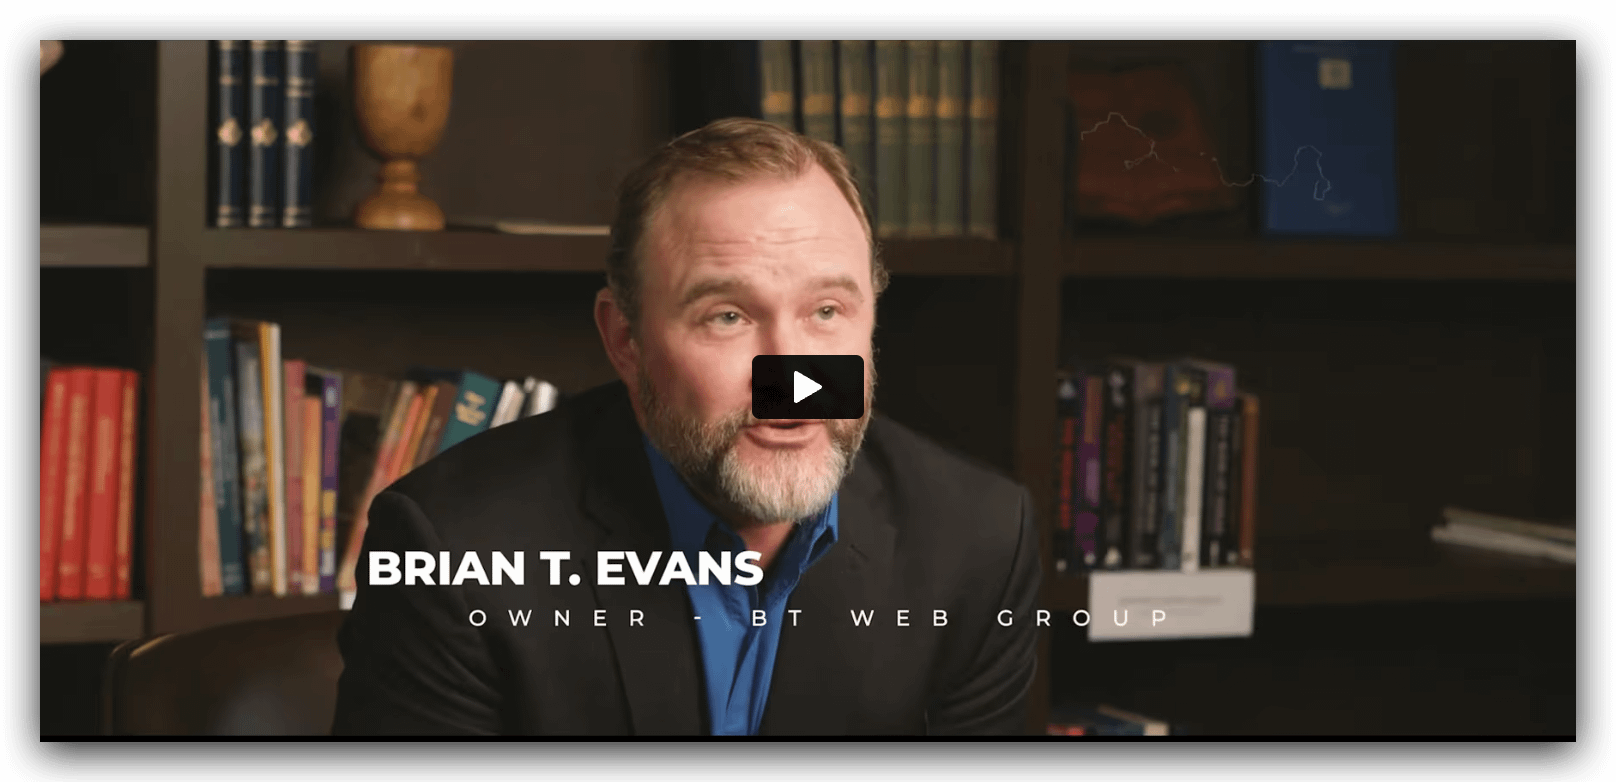 Brian Evans Bt Web Group